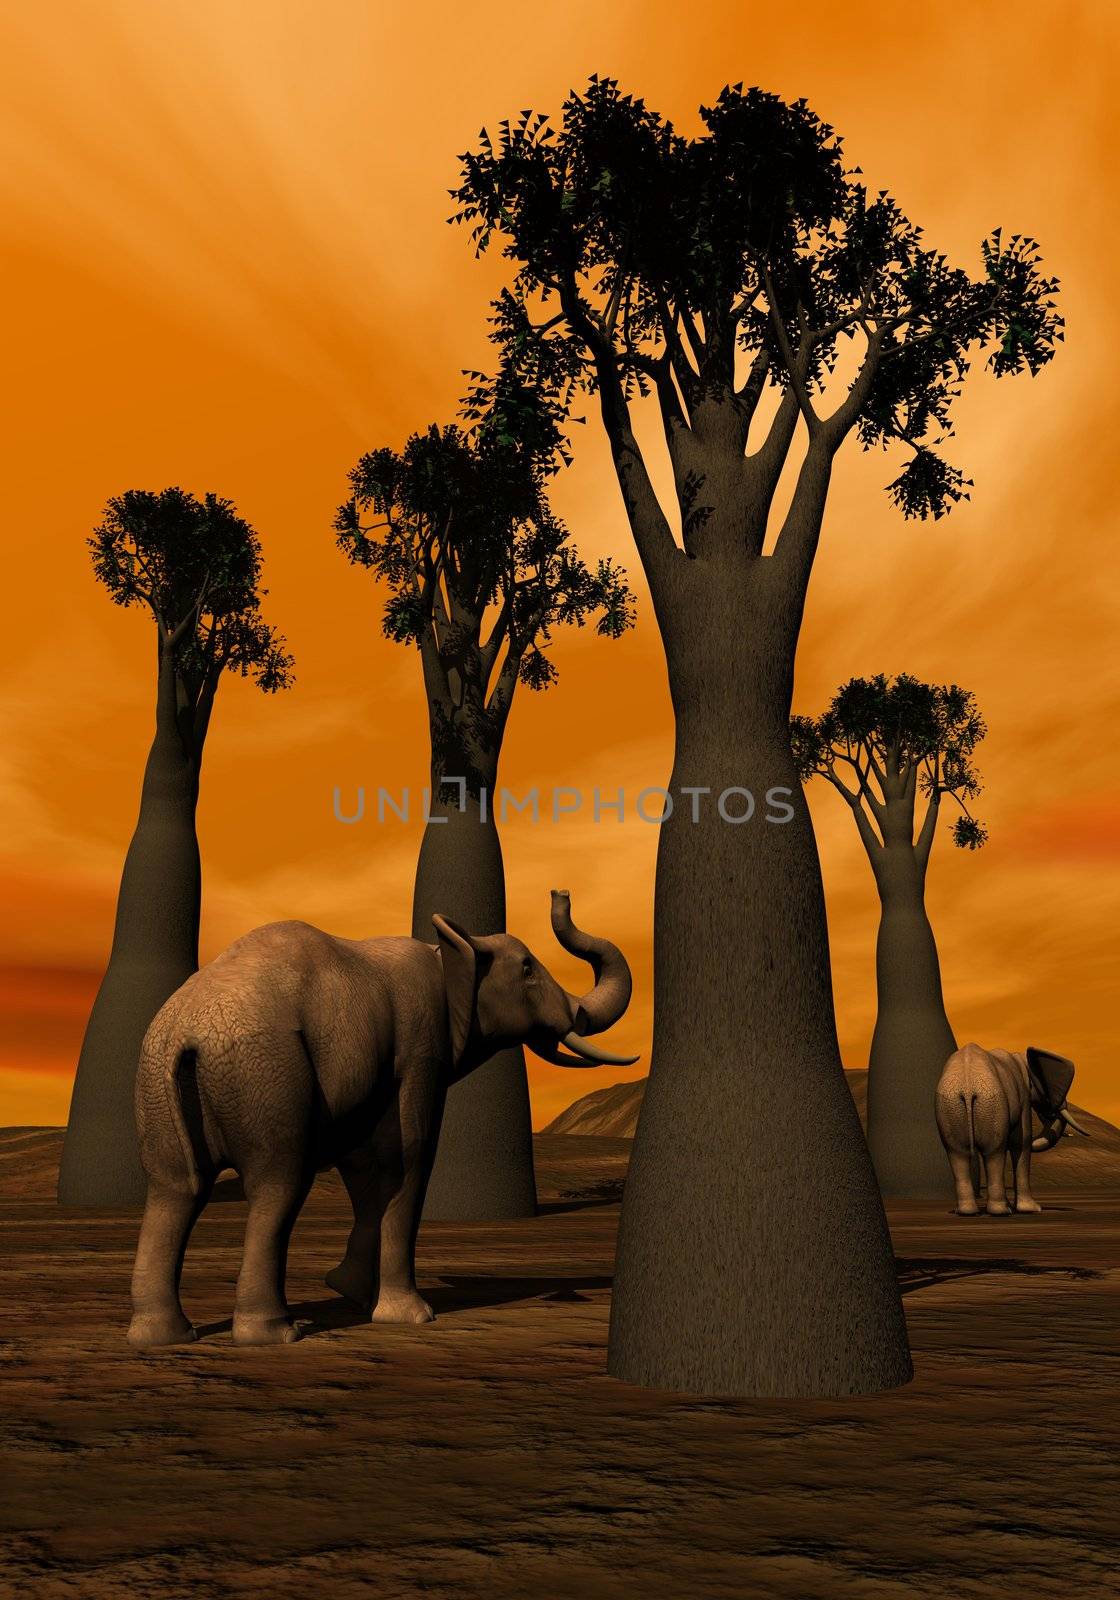 Two elephants walking between baobabs in the savannah by sunset